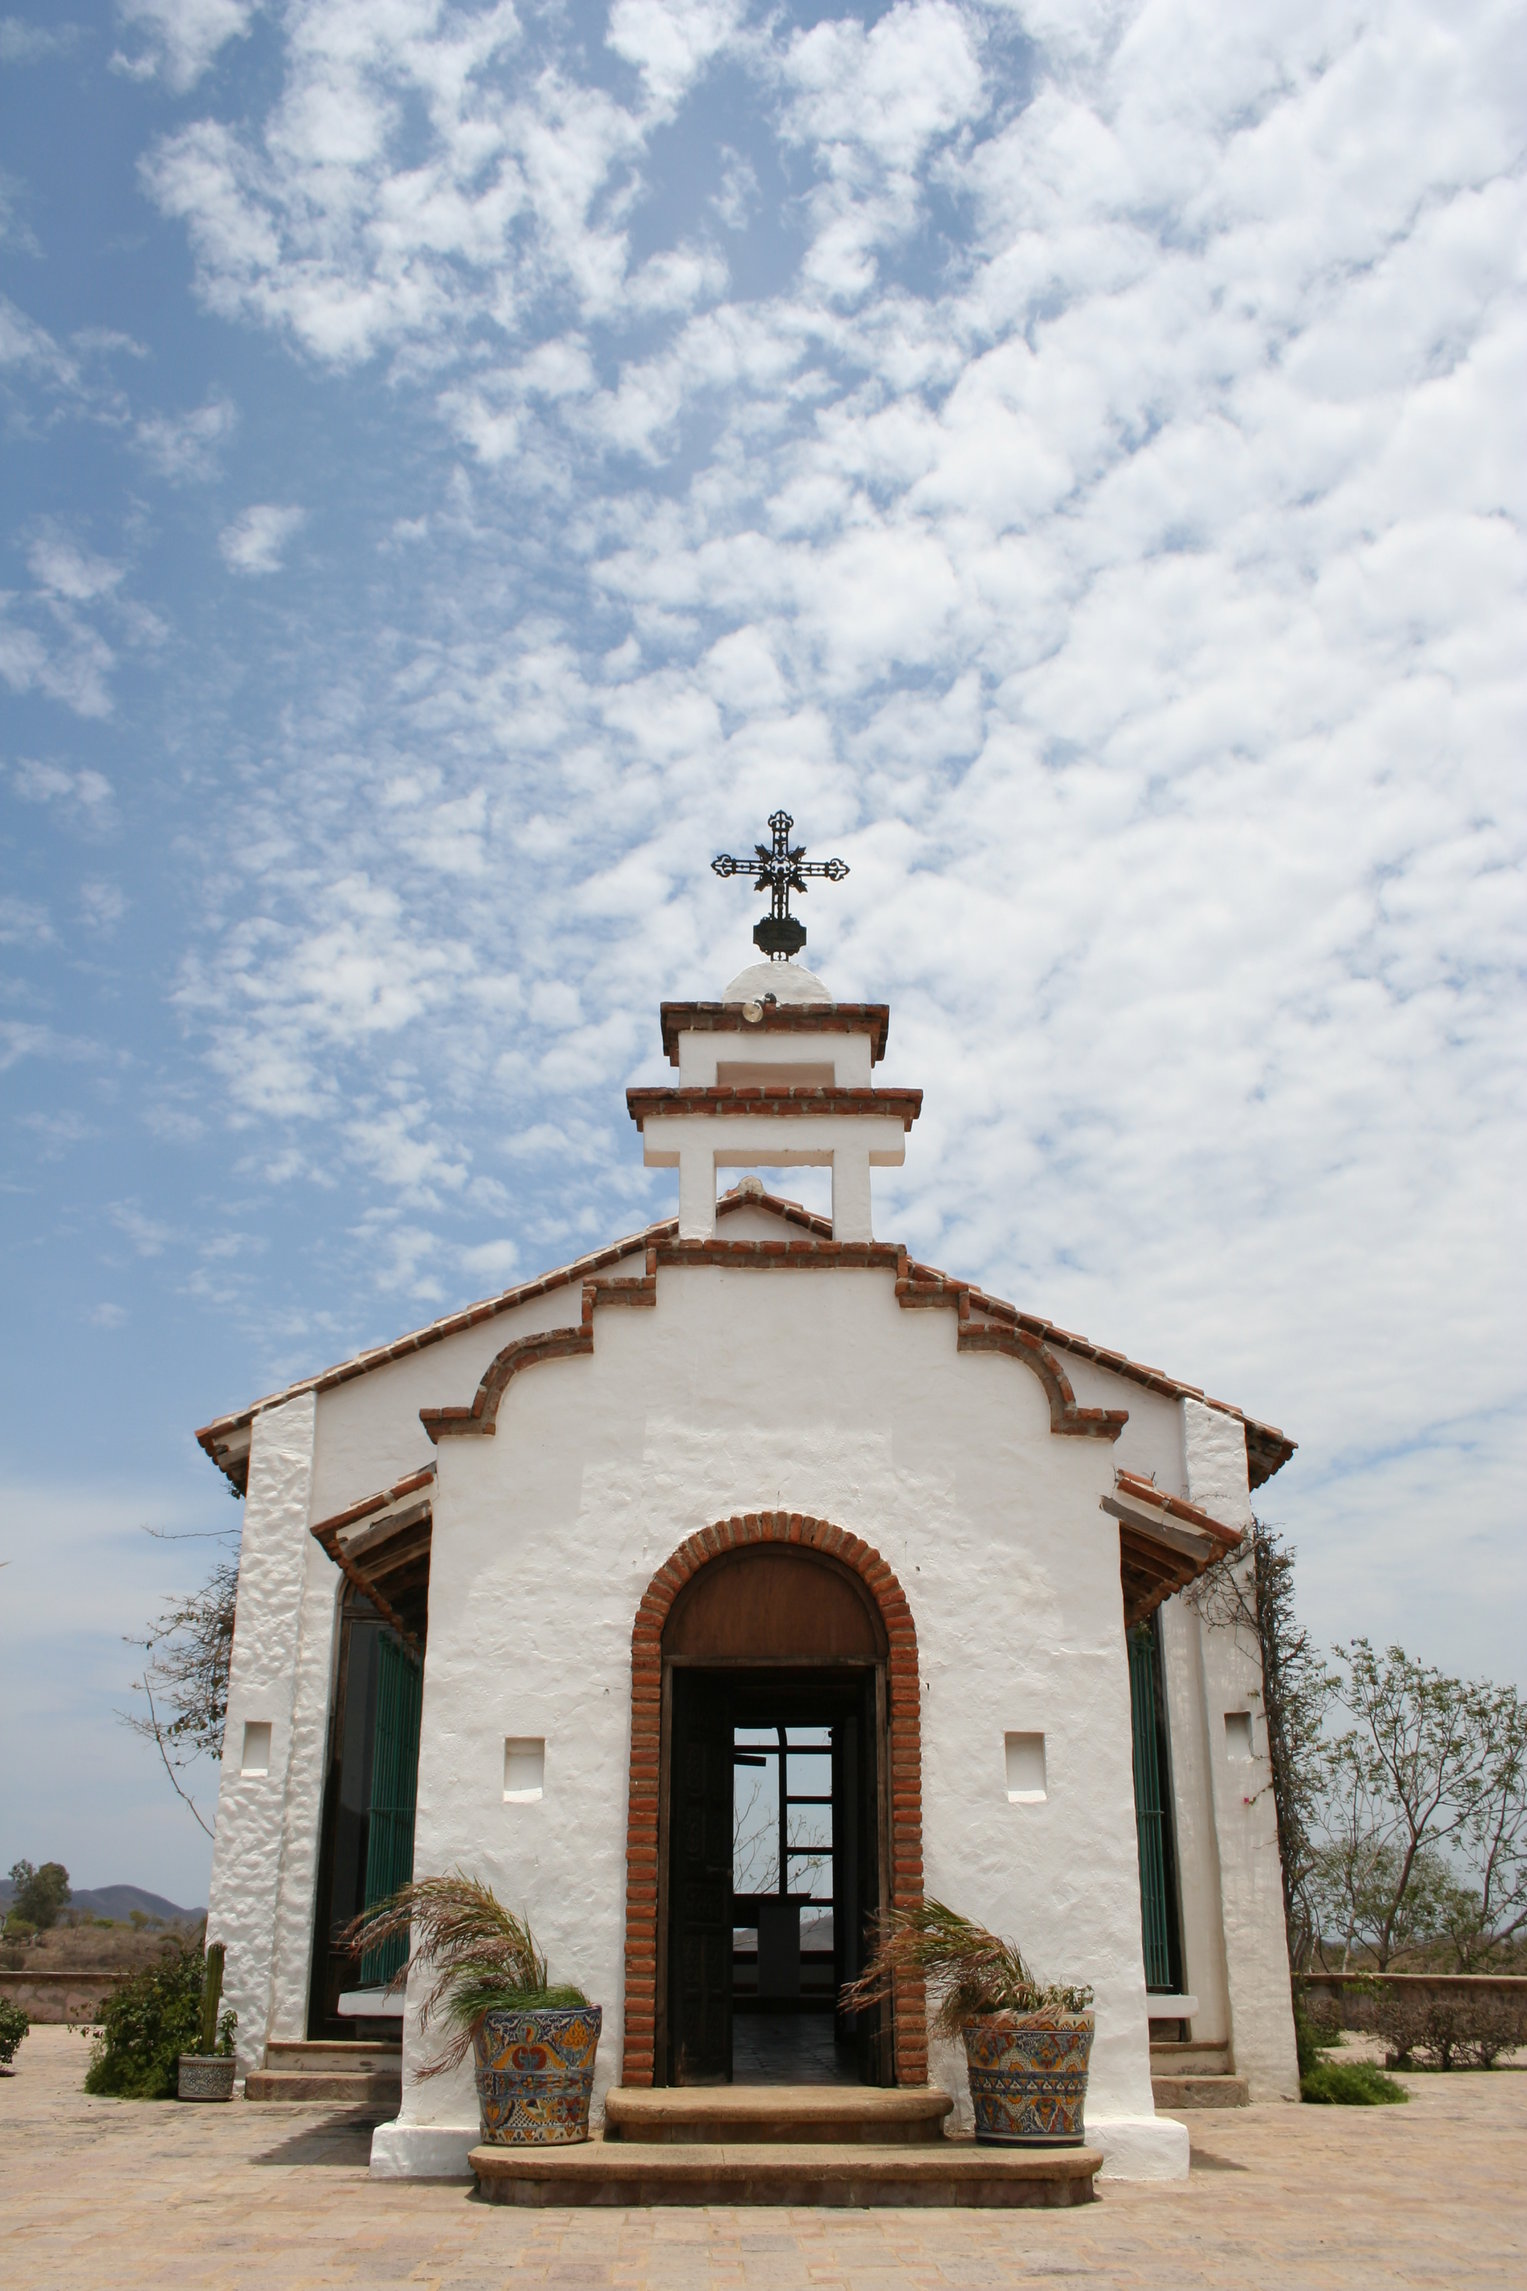 Small Mexican Church by Golovko on DeviantArt